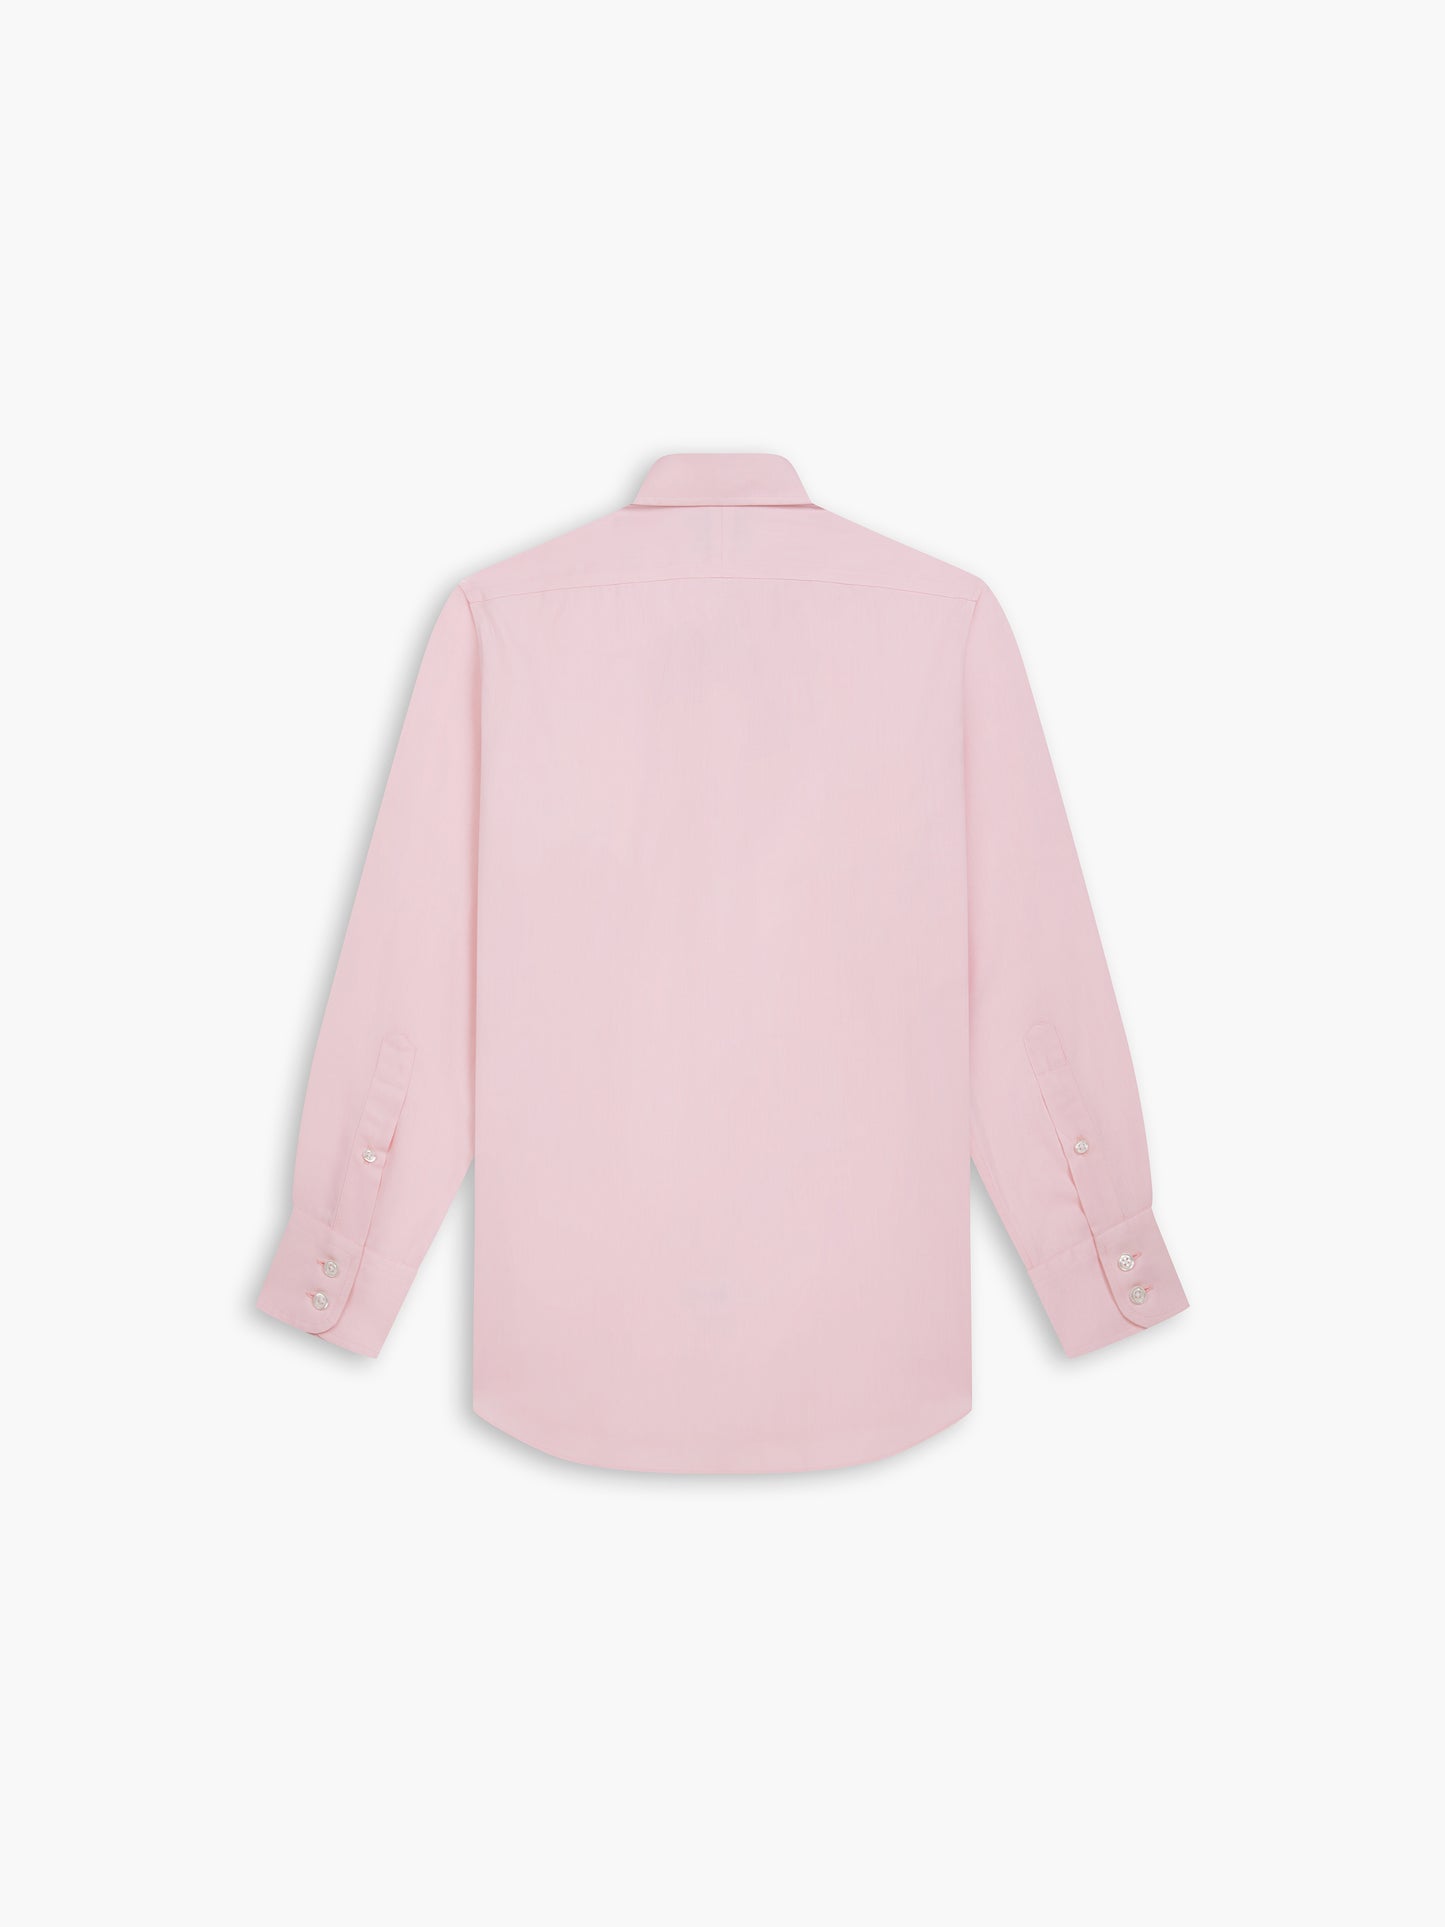 Non-Iron Pink Twill Regular Fit Single Cuff Classic Collar Shirt